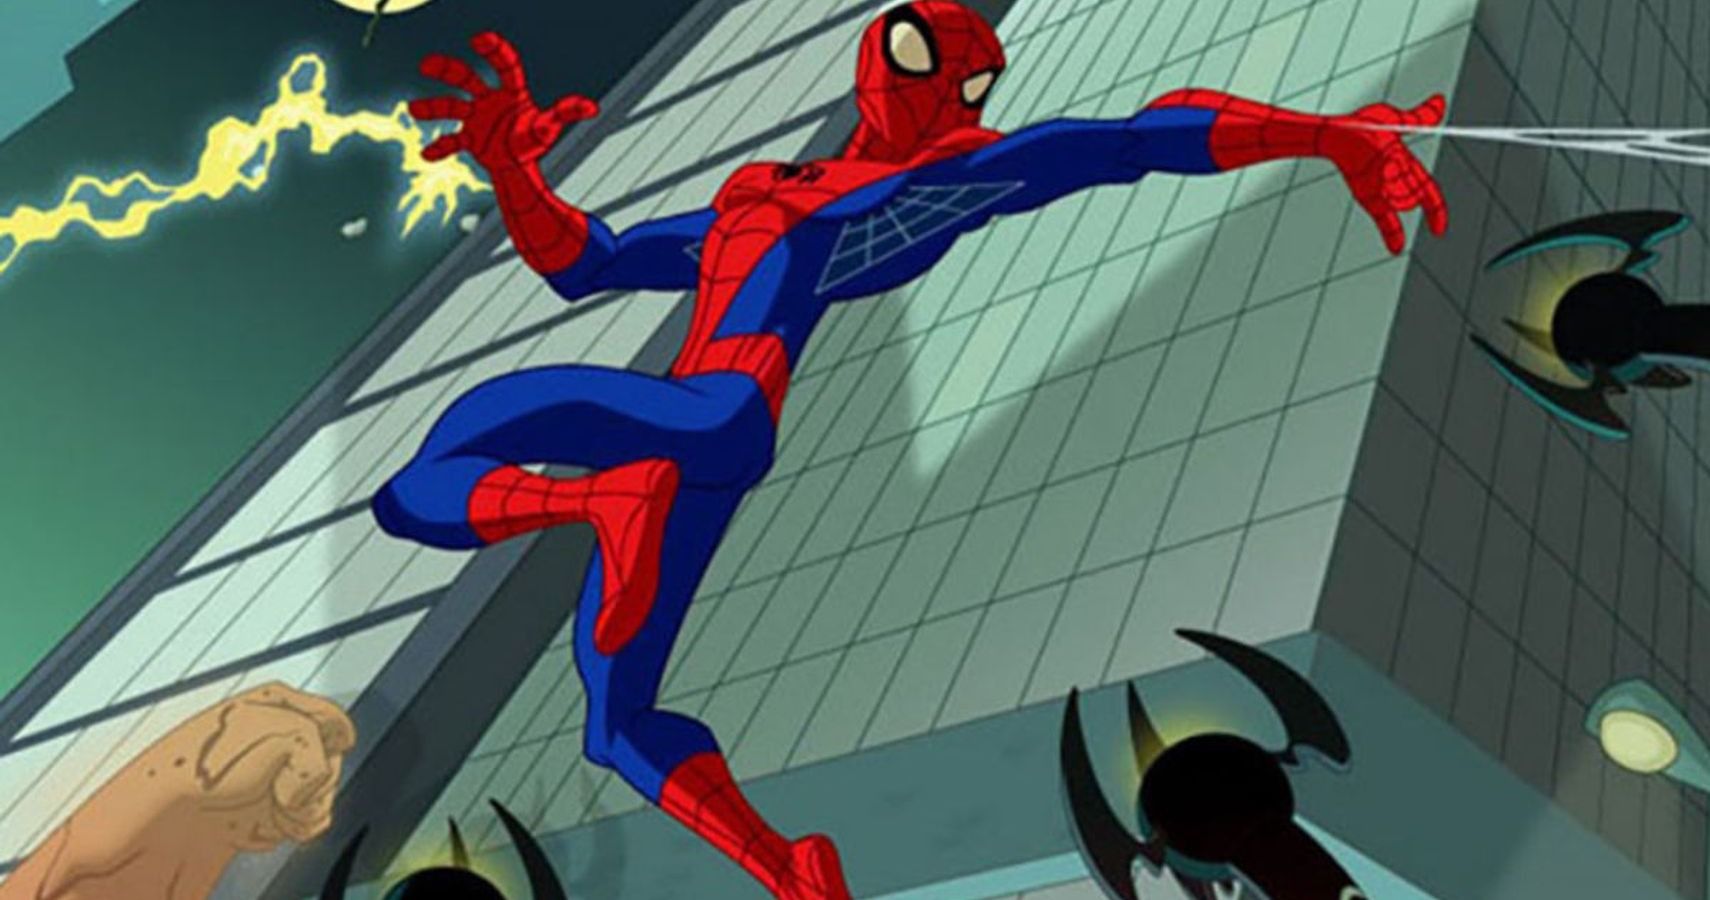 10 Best Episodes of Spectacular Spider-Man, According To IMDB